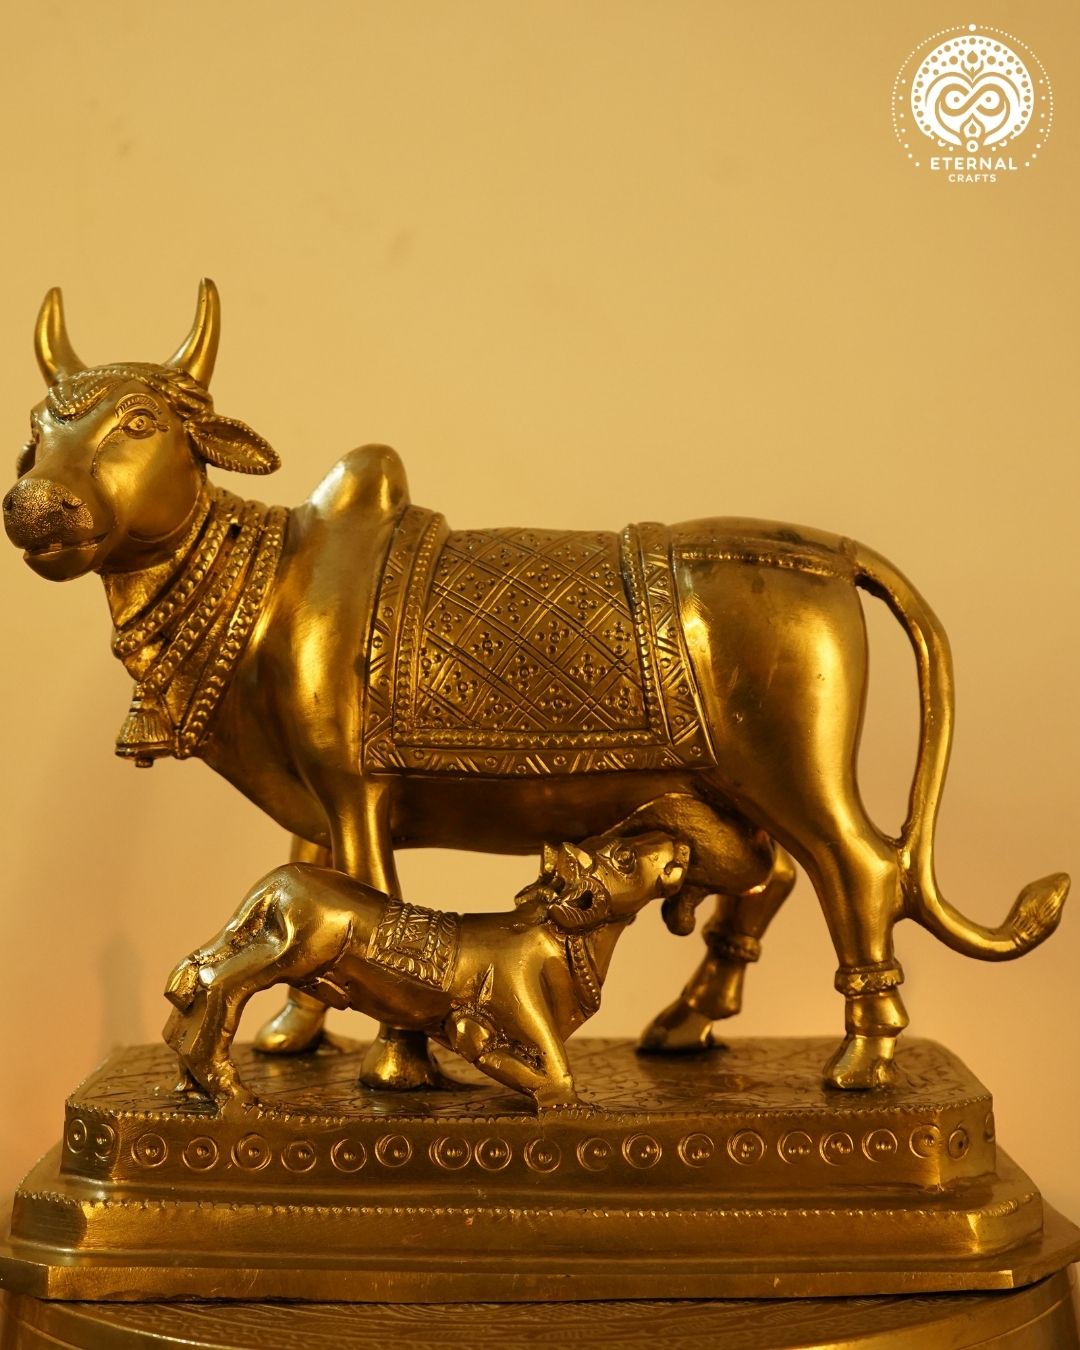 Gomata Brass Statue - Cow and Calf Kamdhenu Idol - 4 inches